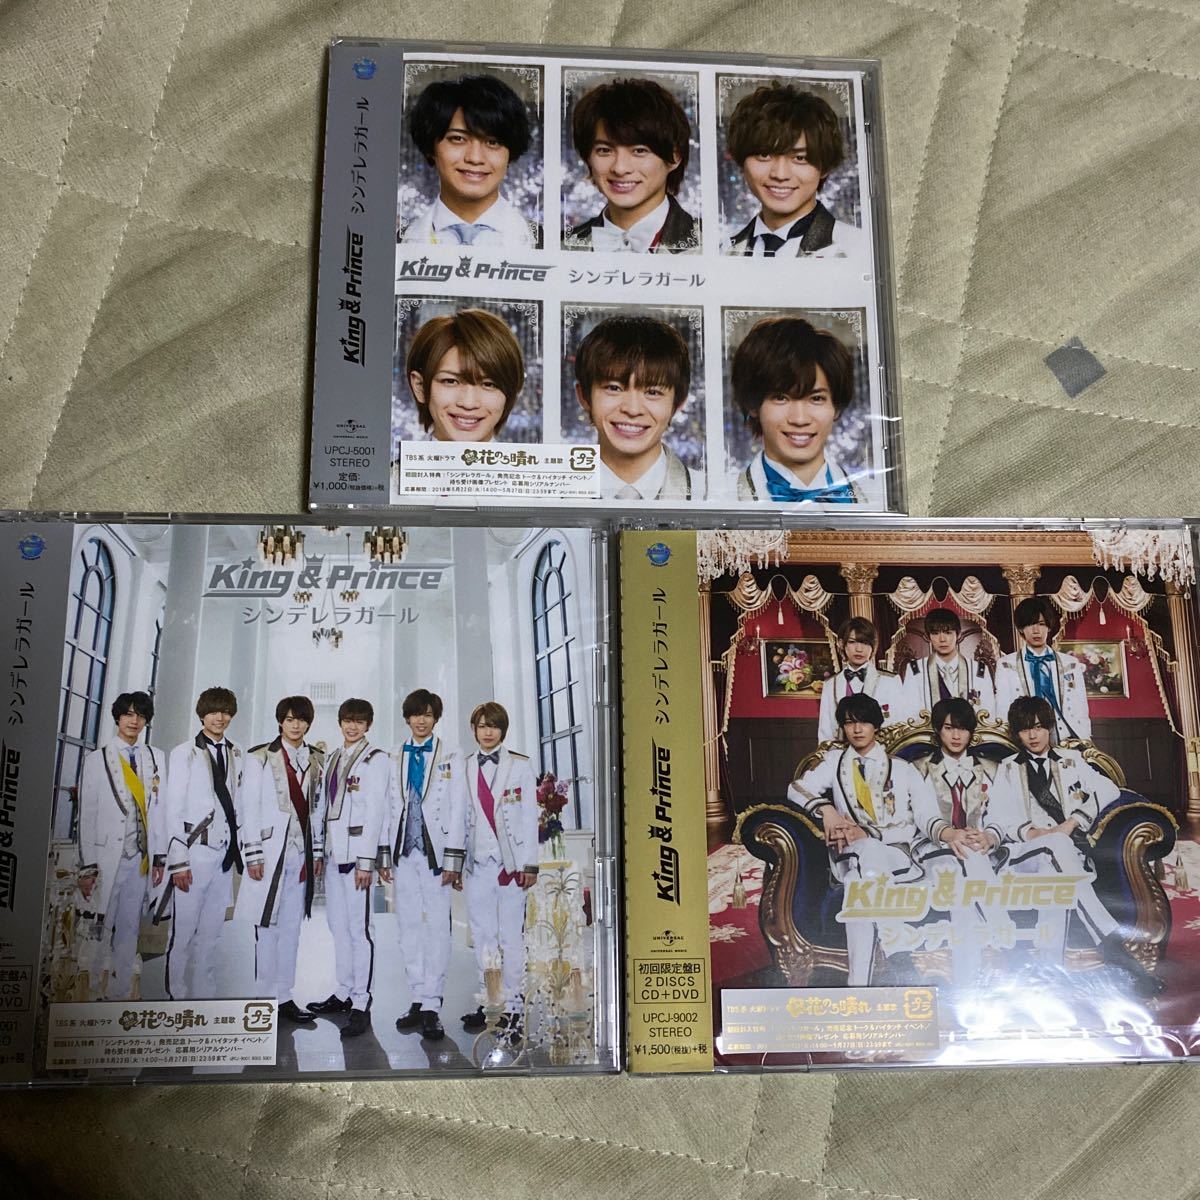 King&Prince シンデレラガール 初回限定盤A B 通常 3形態 CD DVD 特典 